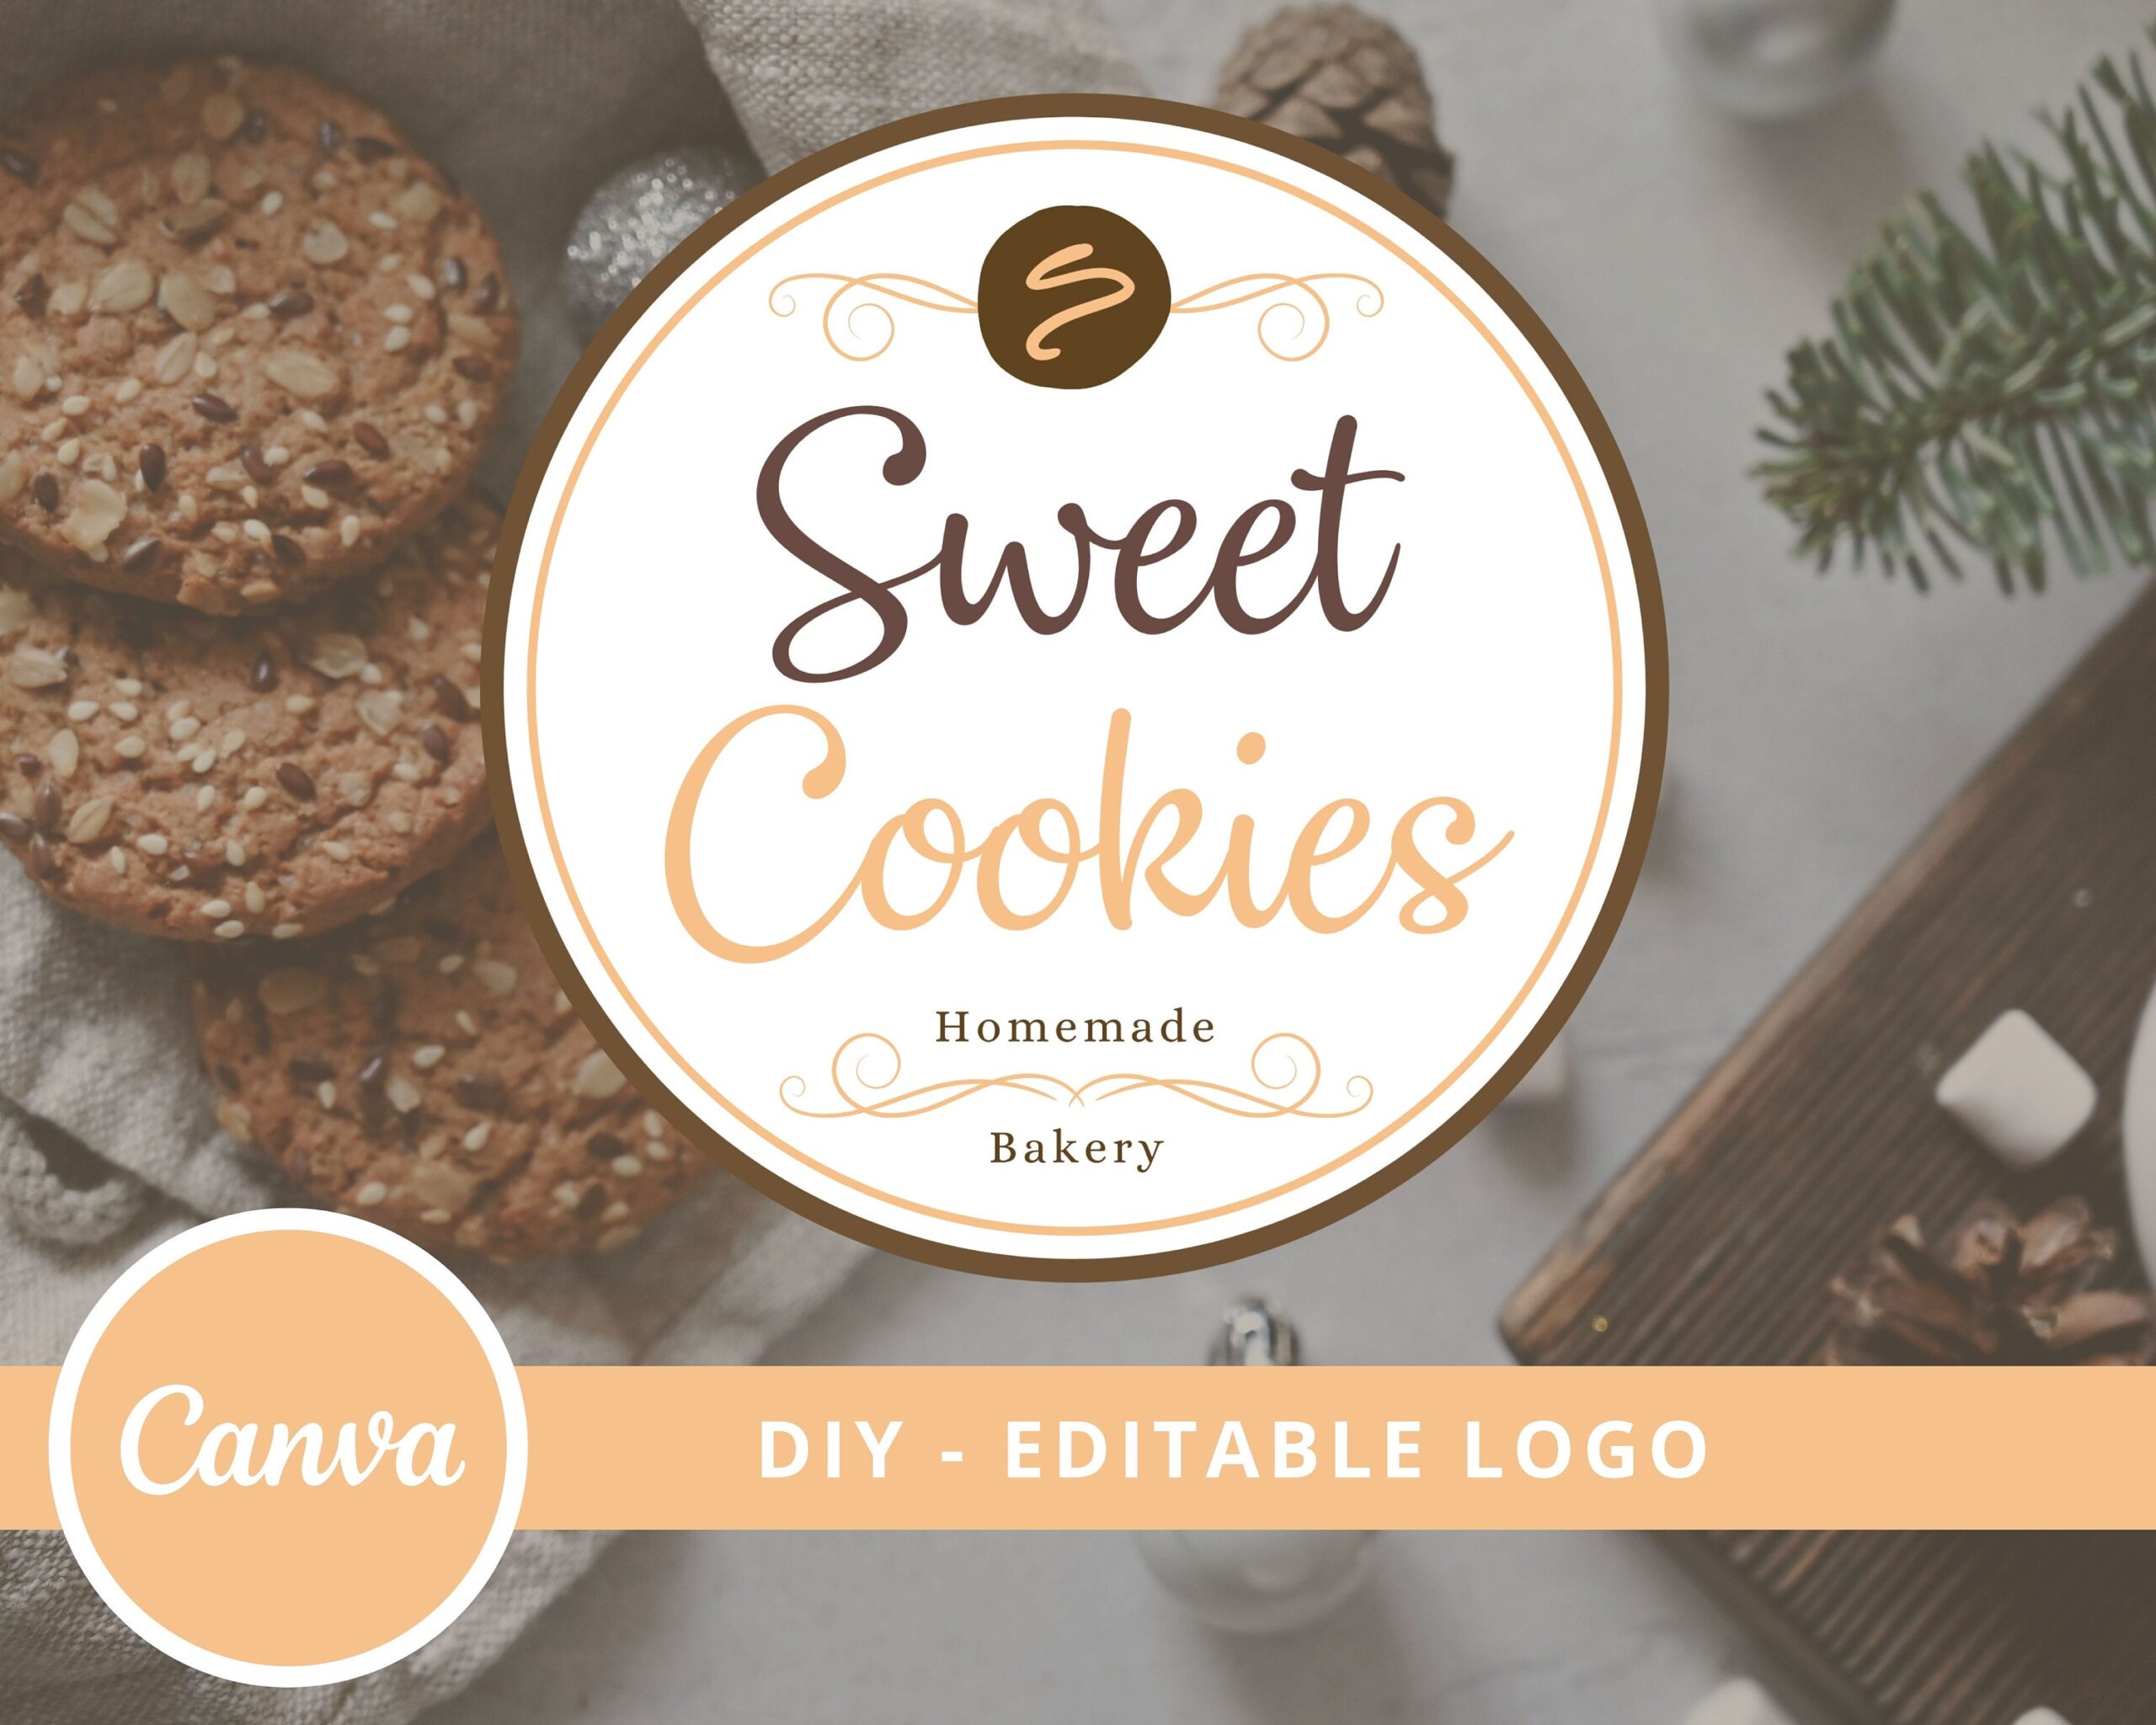 Editable Logo Design - Premade Cookie Logo - DIY Edit Yourself Canva Template. Cookie Logo, Logo Maker for Handmade Cookies - Instant Access